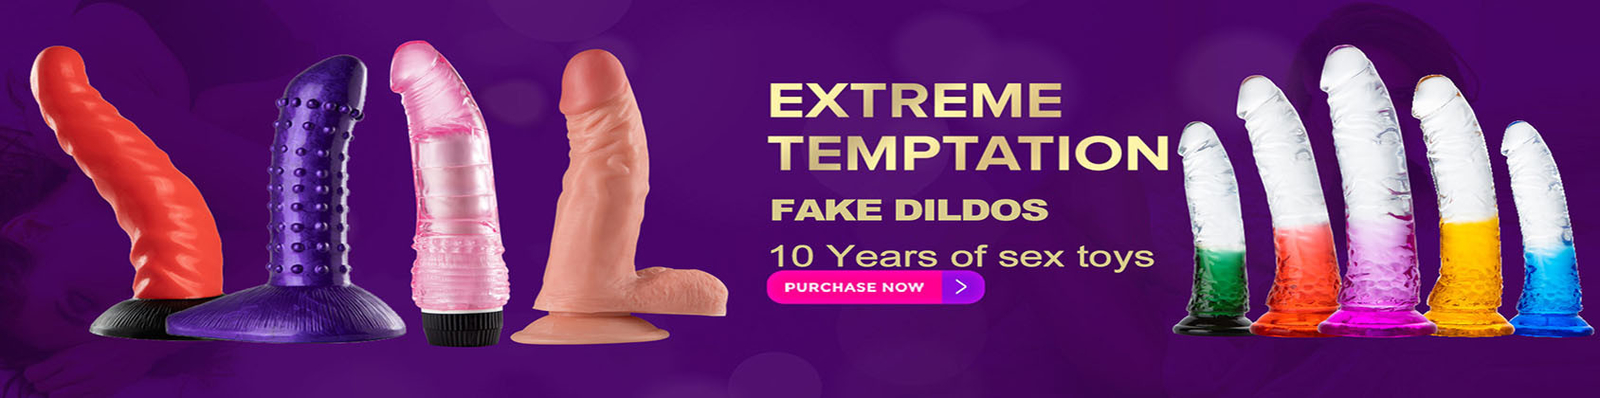 mainan seks dildo